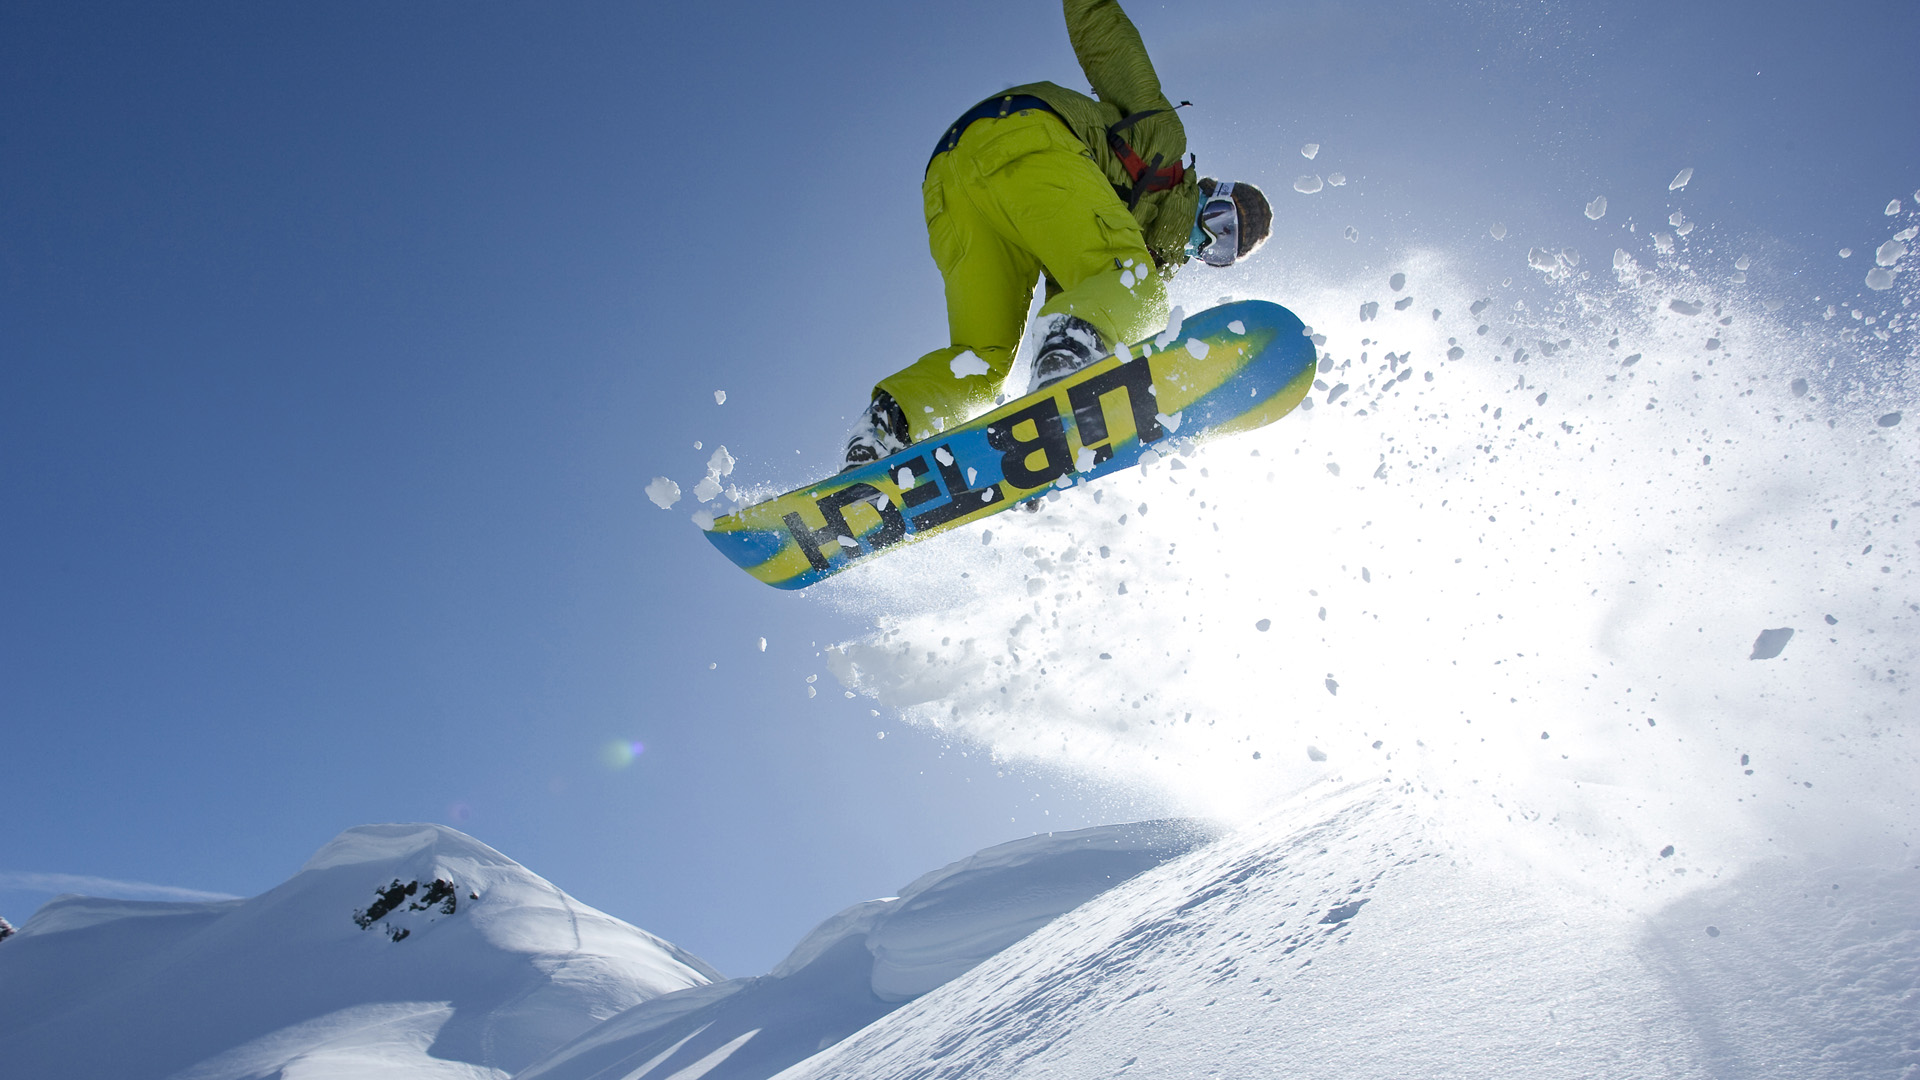 Burton Snowboarding Wallpaper For Windows #HvXem » www ...